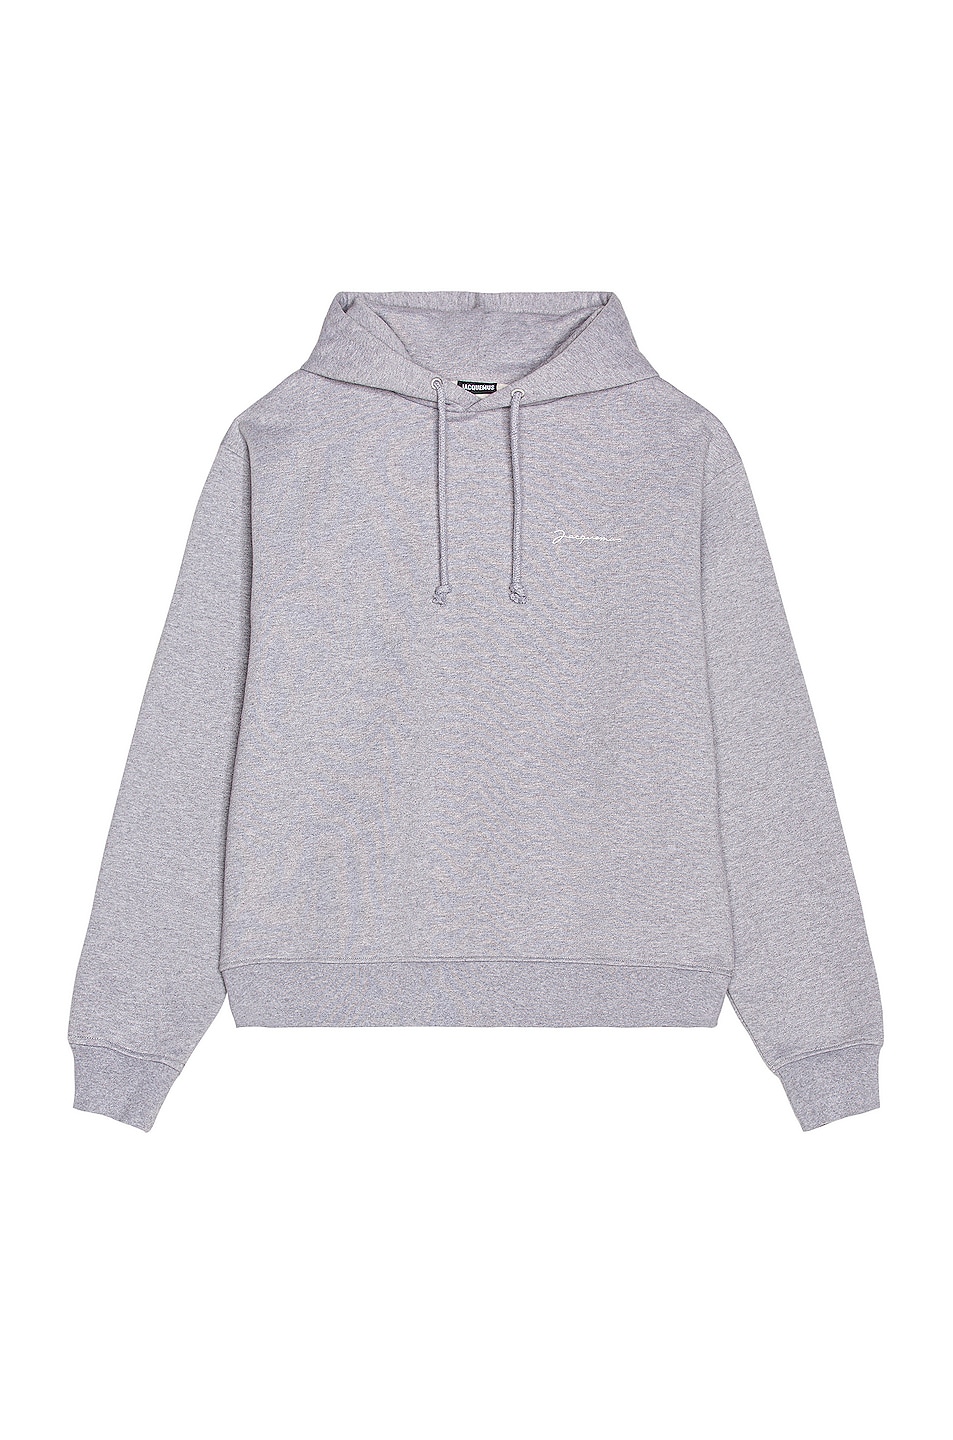 JACQUEMUS Le Sweatshirt in Grey | FWRD